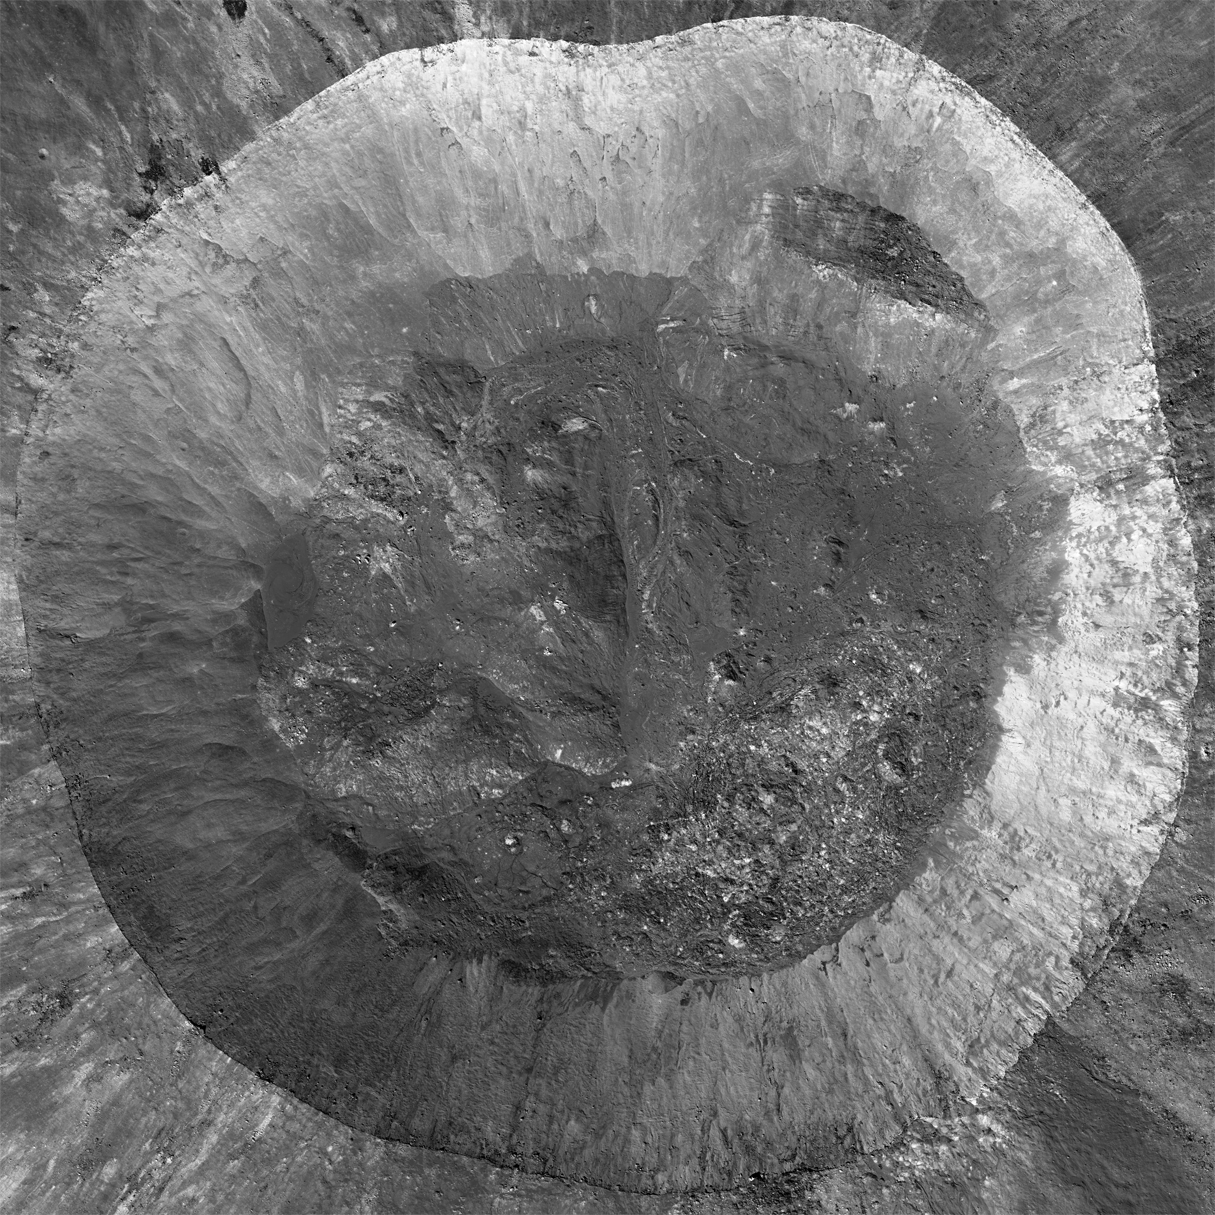 LROC Giordano Bruno crater mosaic